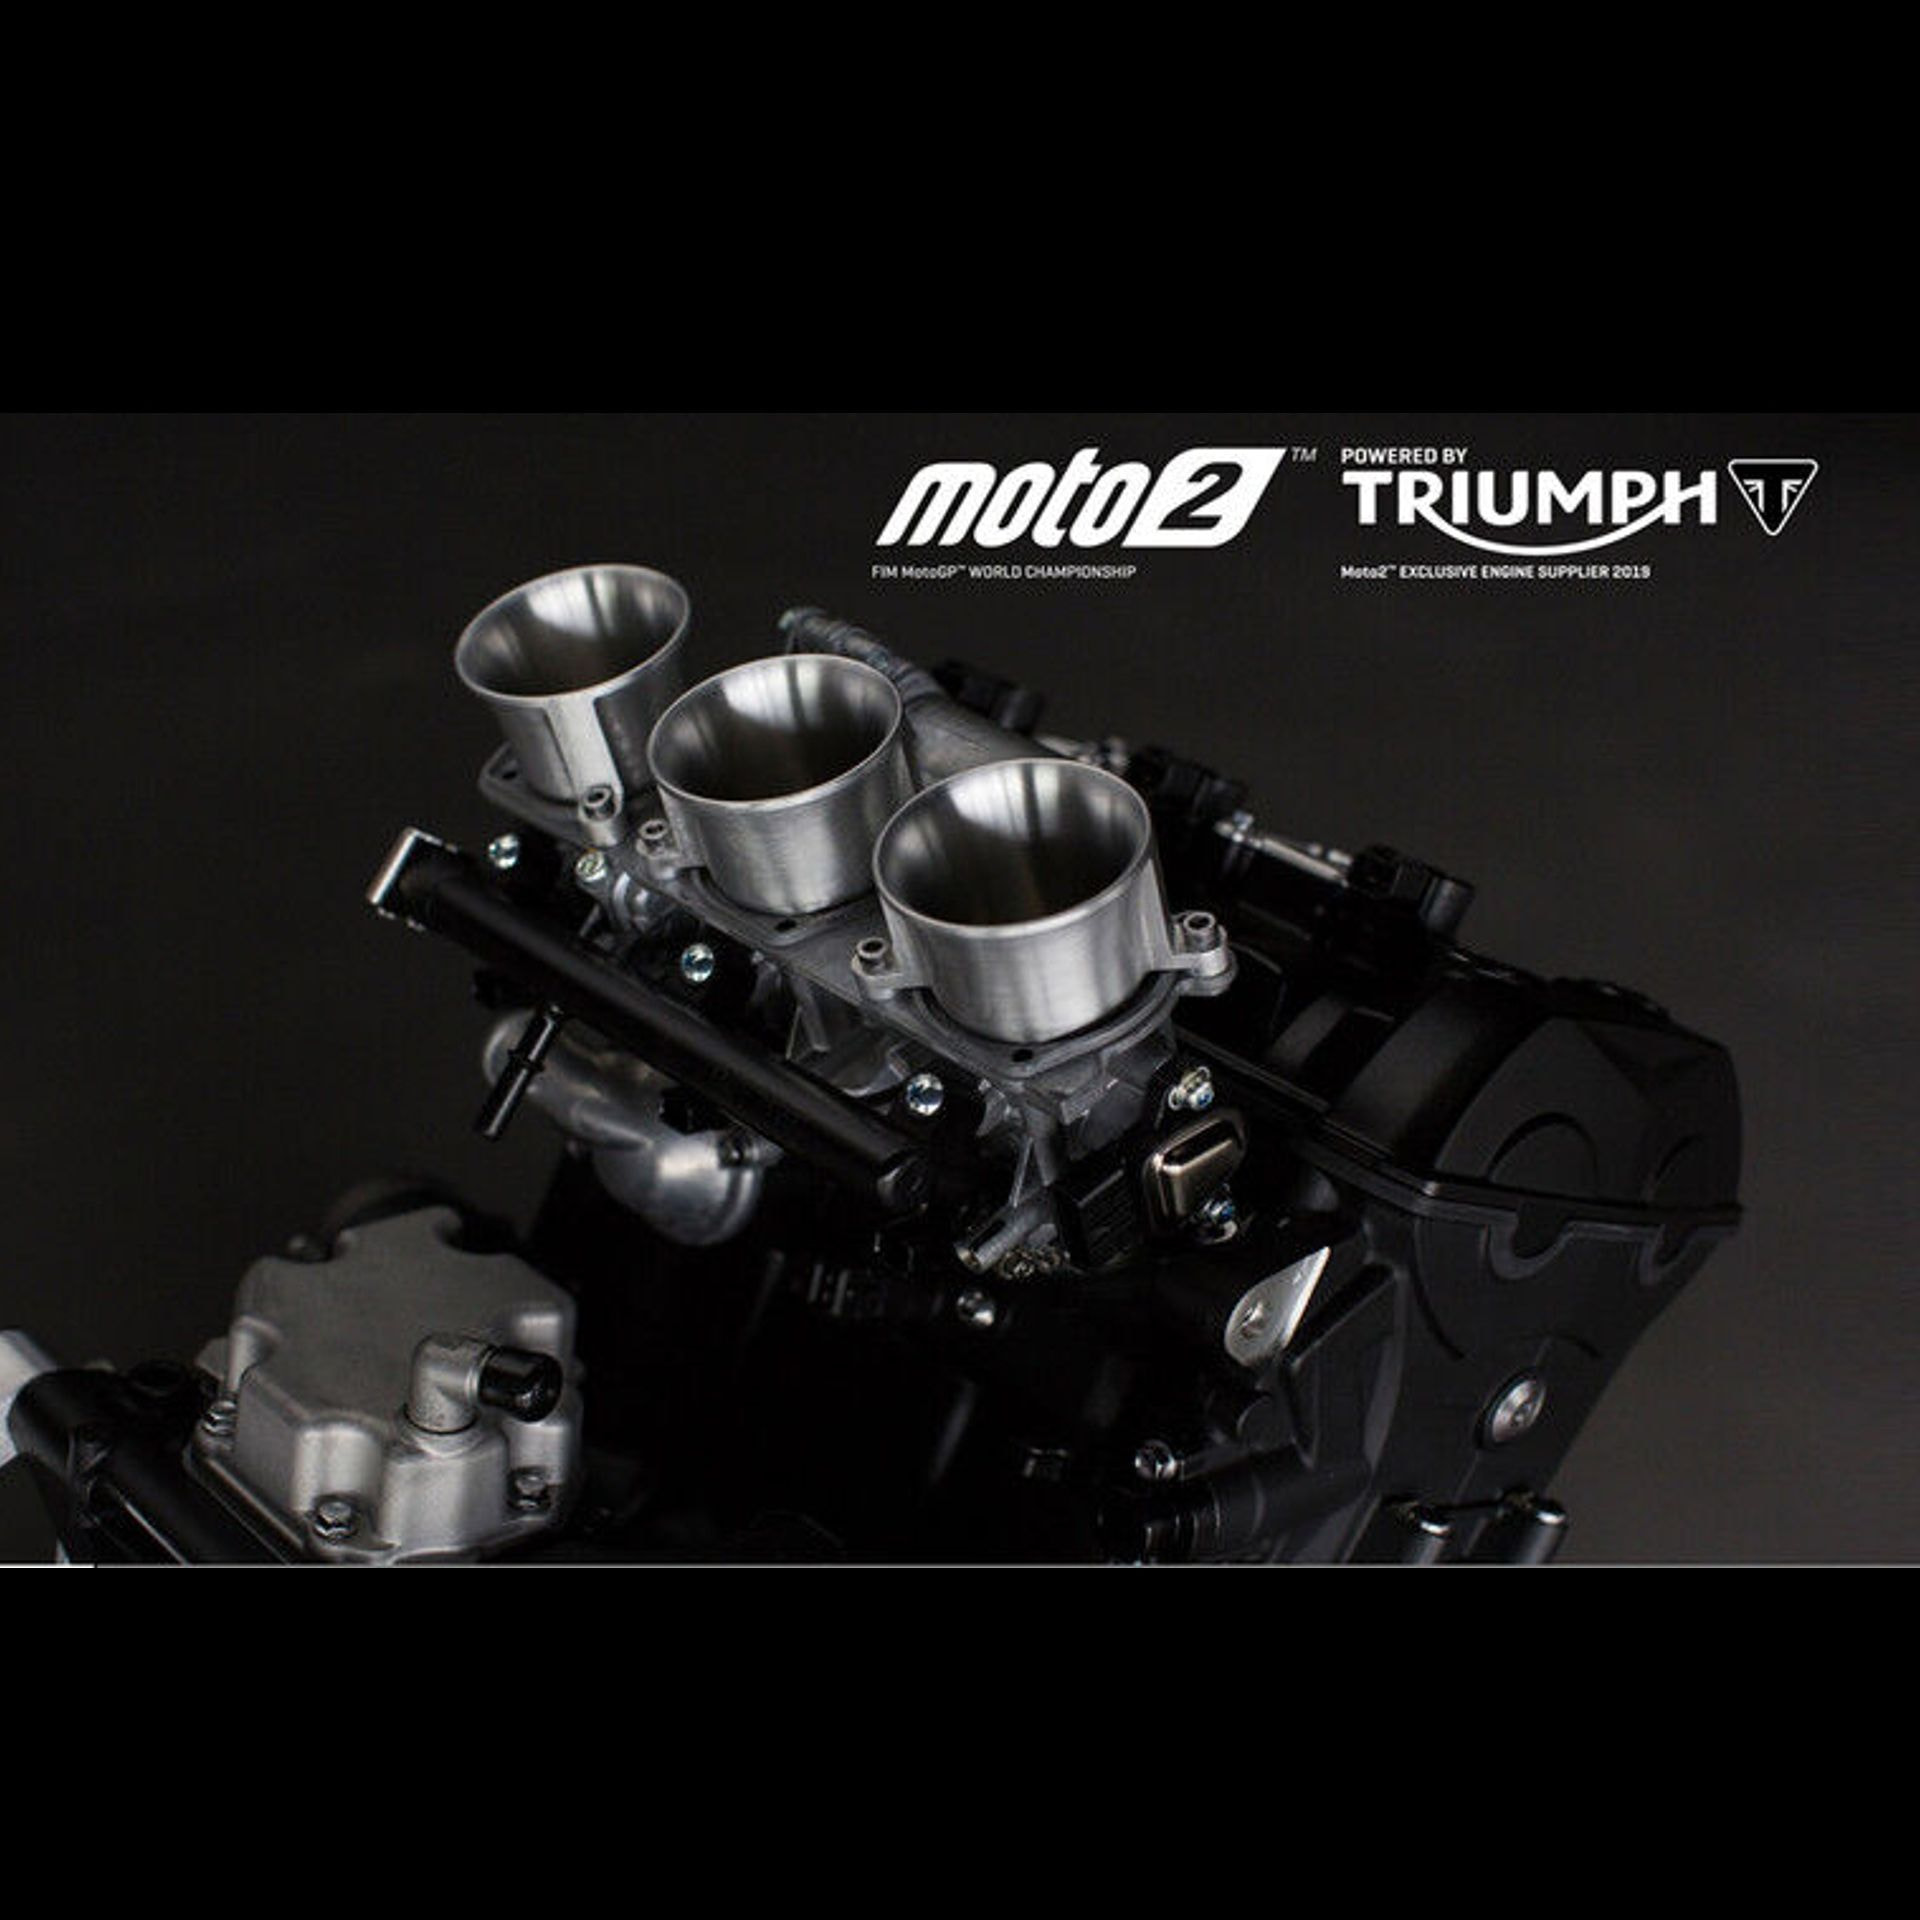 New Triumph engine